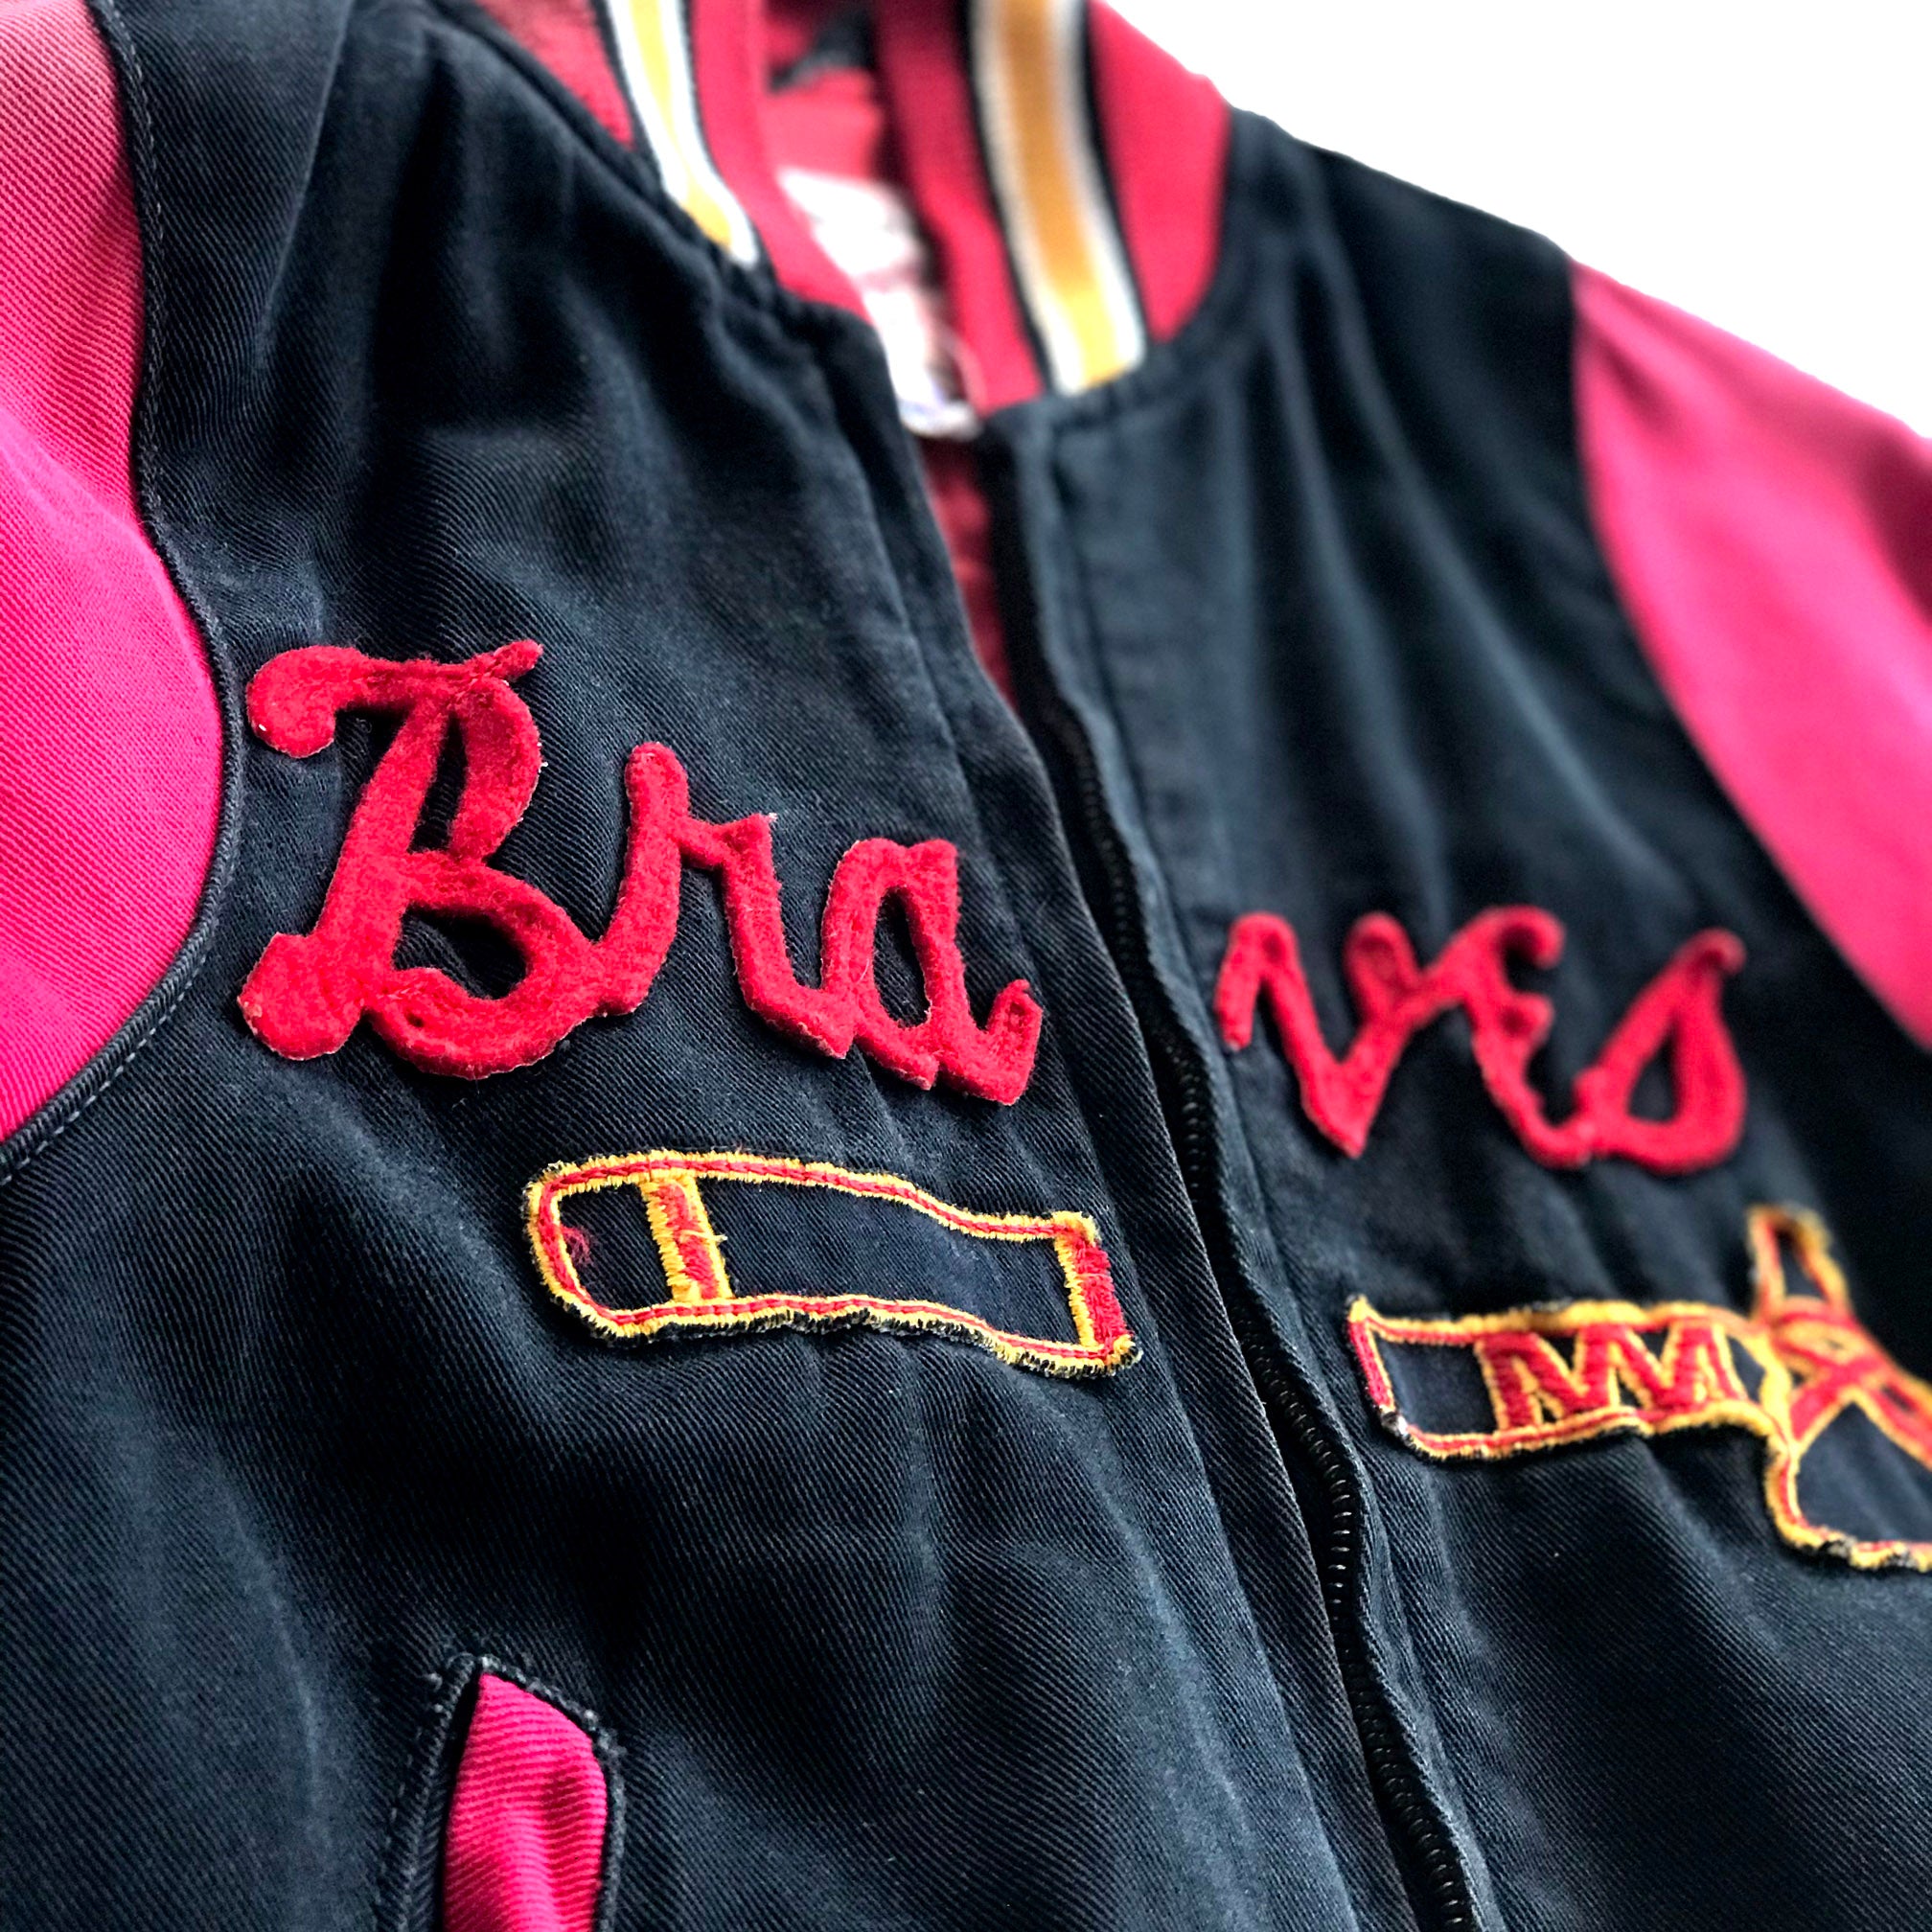 Milwaukee Braves Vintage Apparel & Jerseys